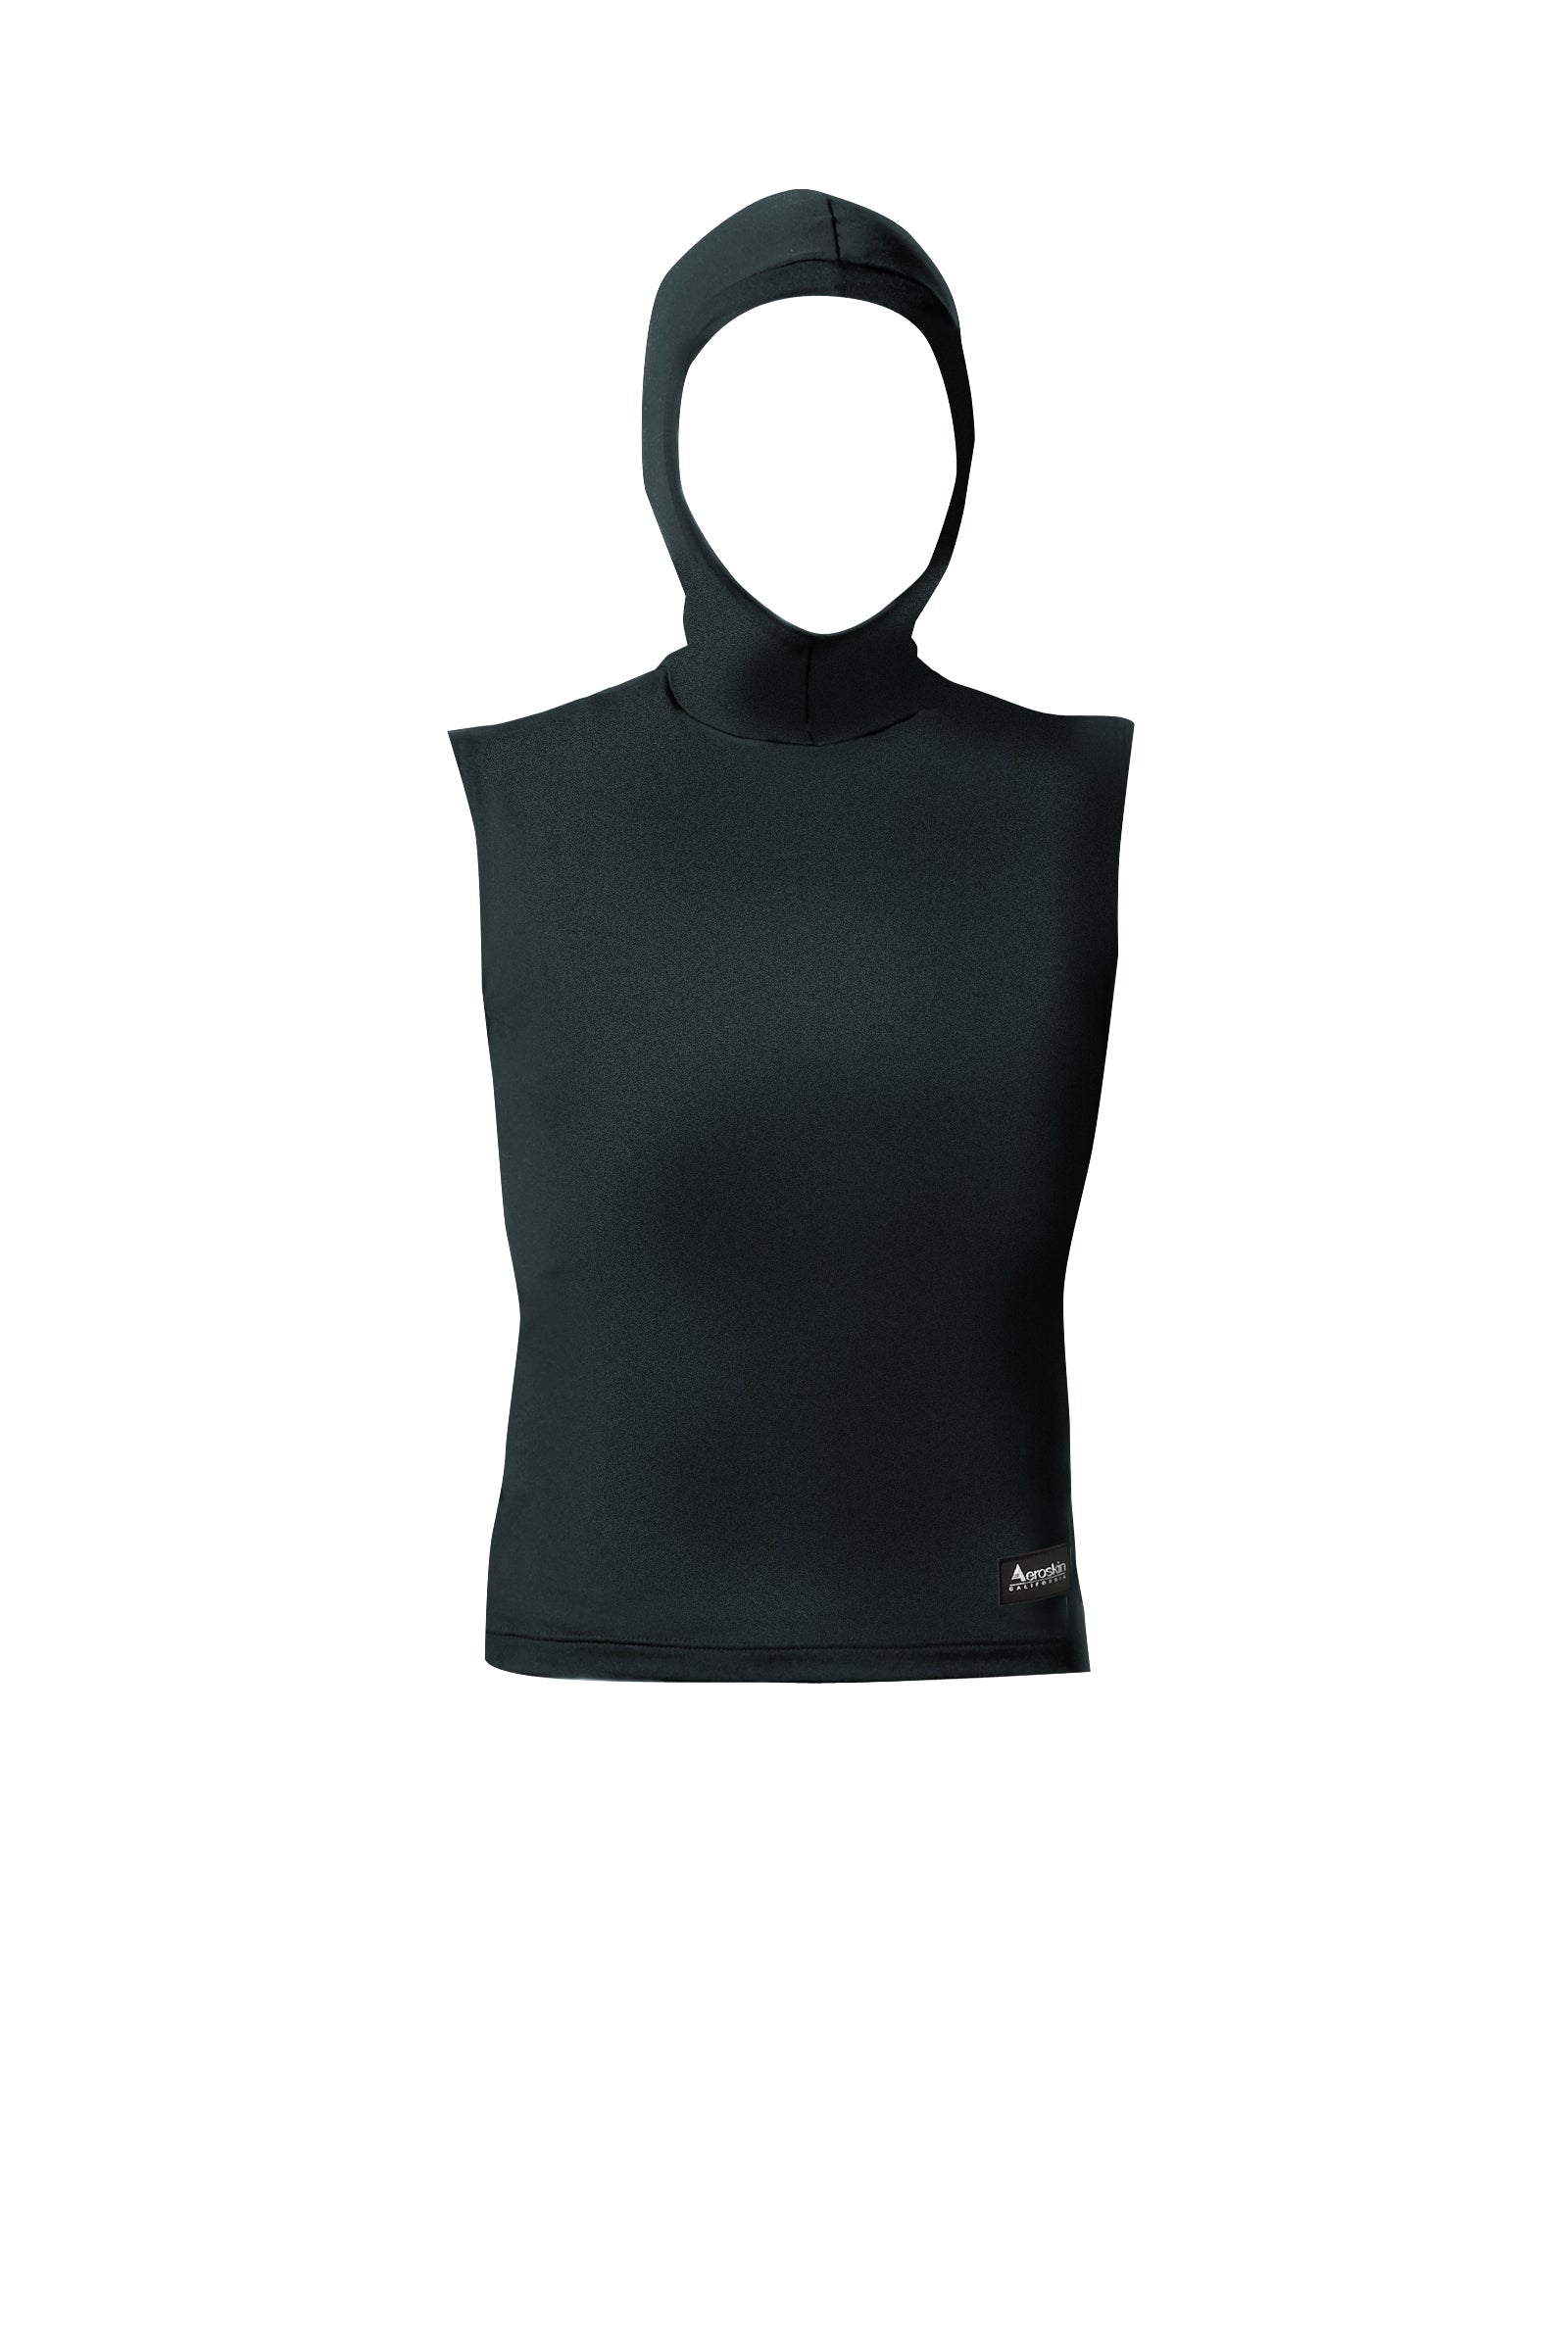 P345 Sleeveless Pullover Vest with Hood (Unisex)-Top-wetsuit, diver, sharkskin, snorkeling gear, watersports equipment, diving fins, snorkeling mask, ocean reef, Garmin G1